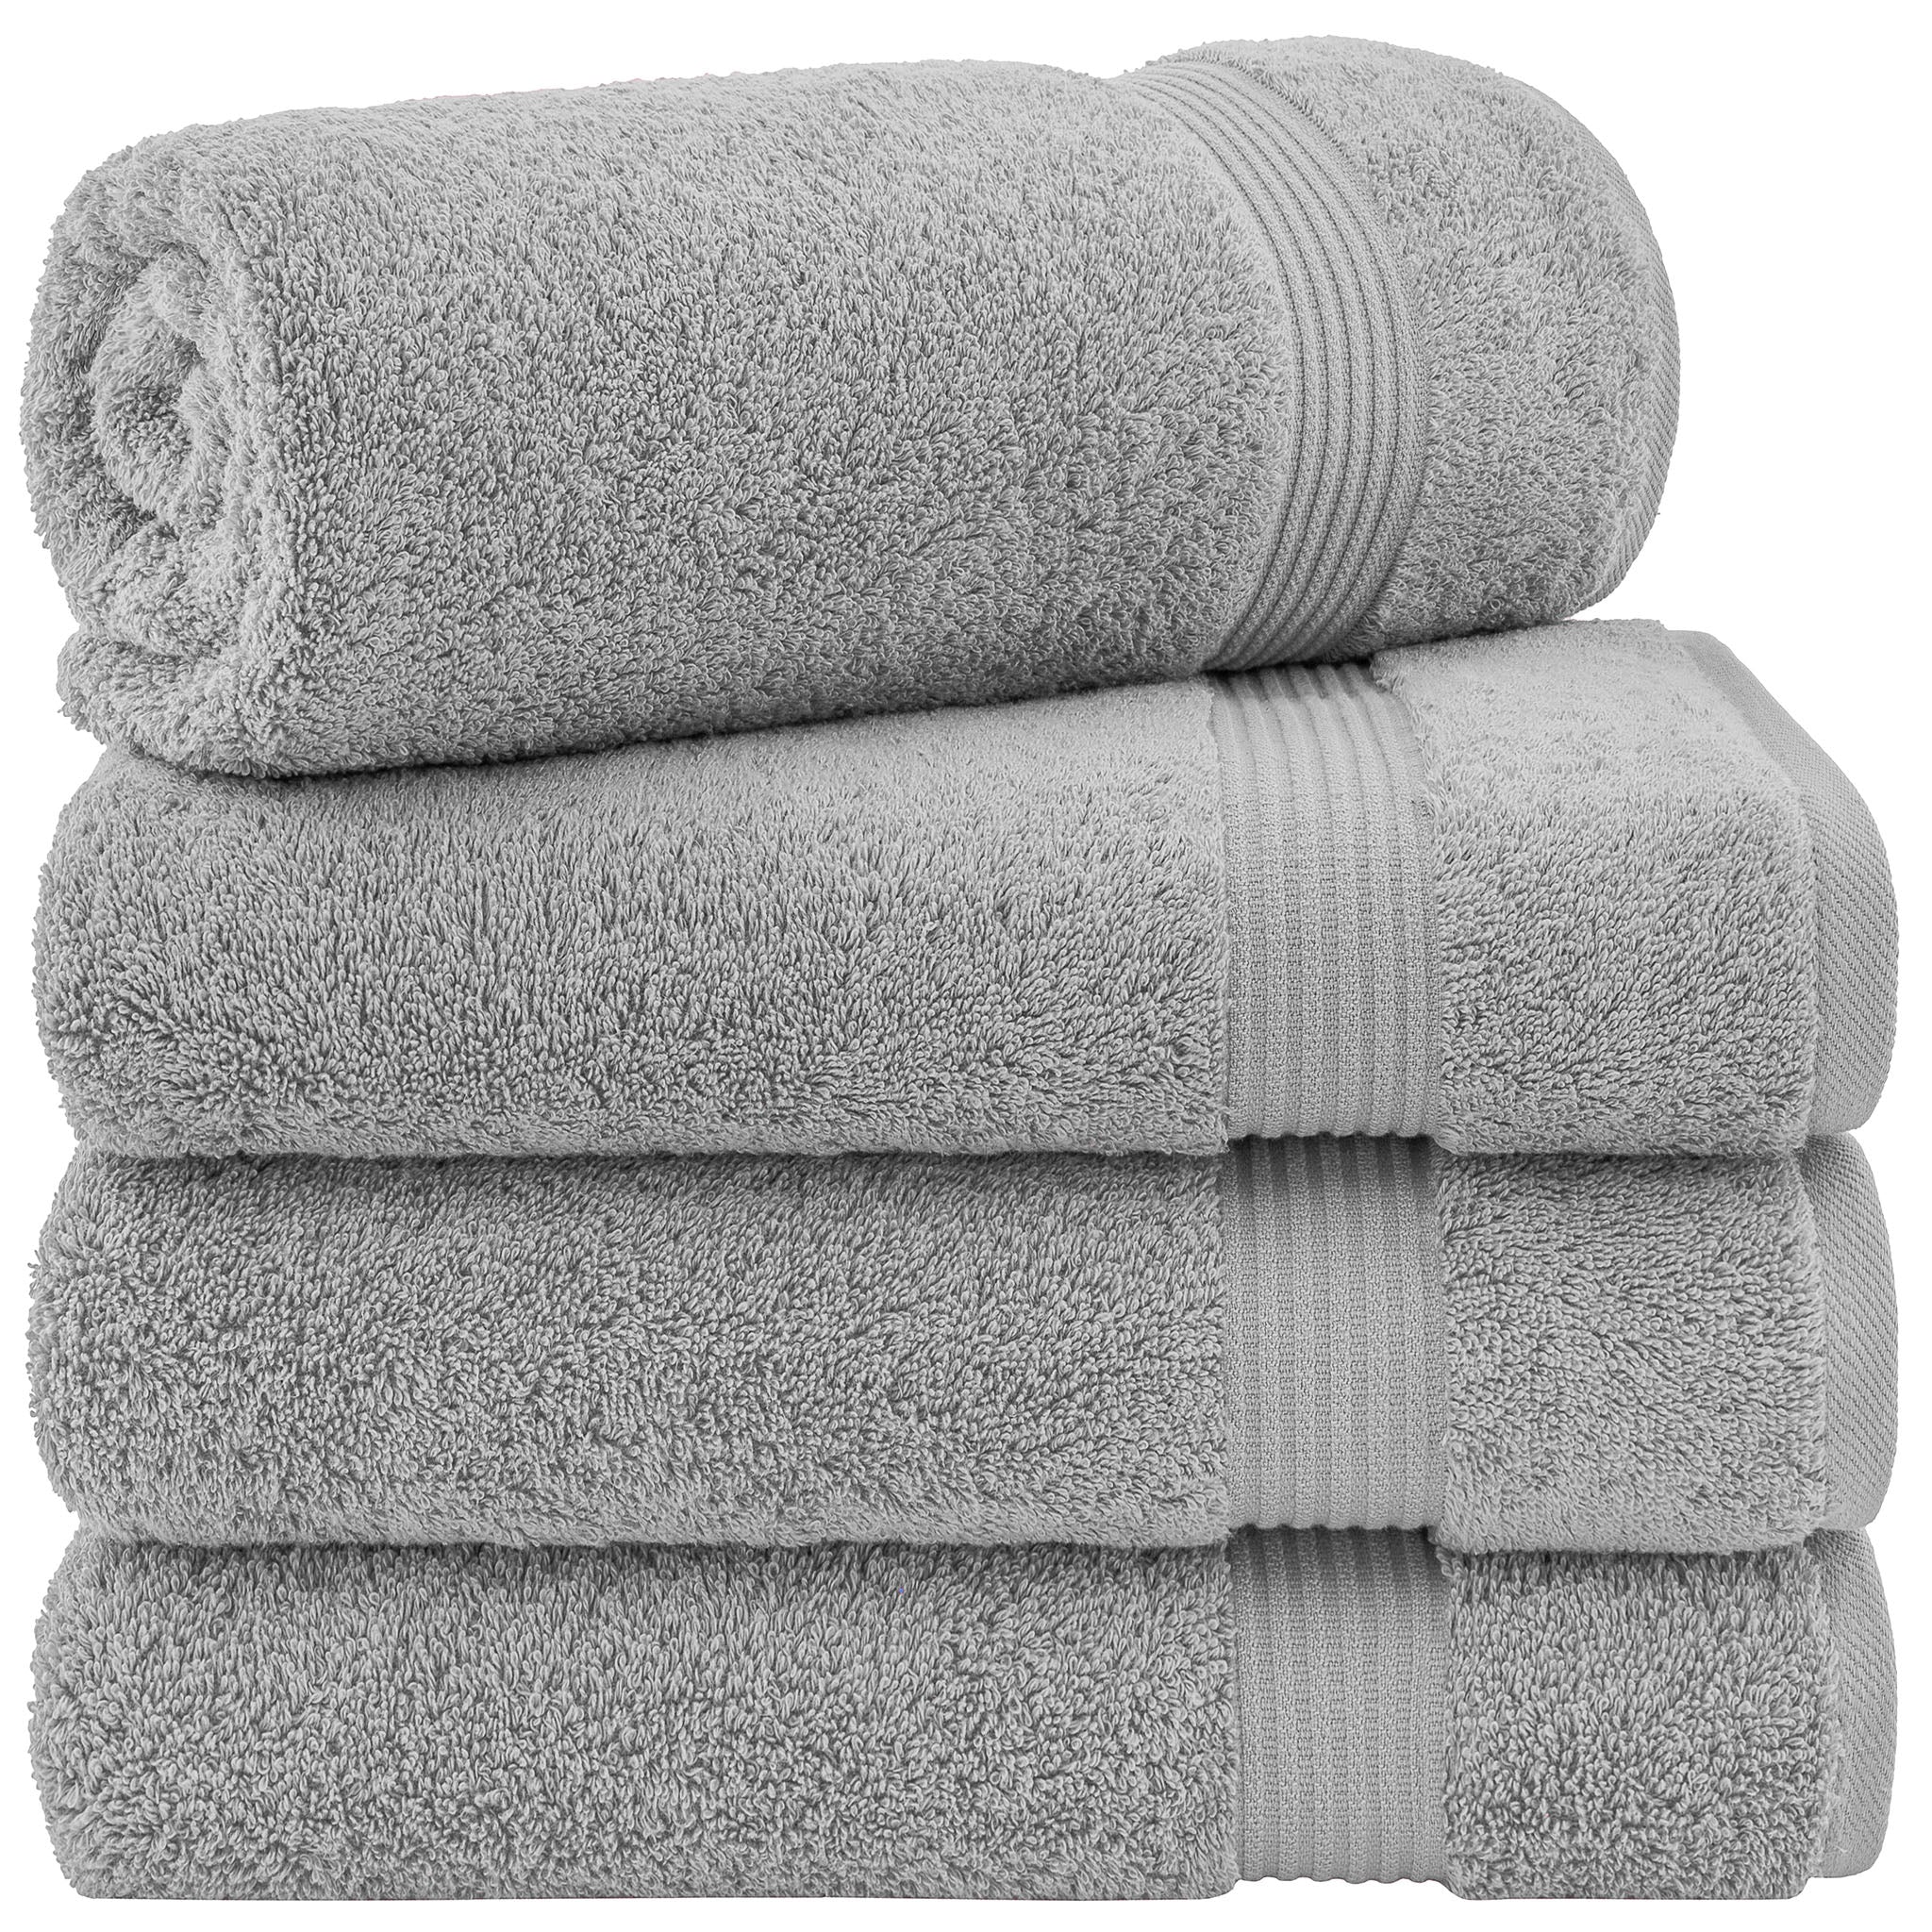 American Soft Linen Bekos 100% Cotton Turkish Towels, 4 Piece Bath Towel Set -rockridge-gray-01